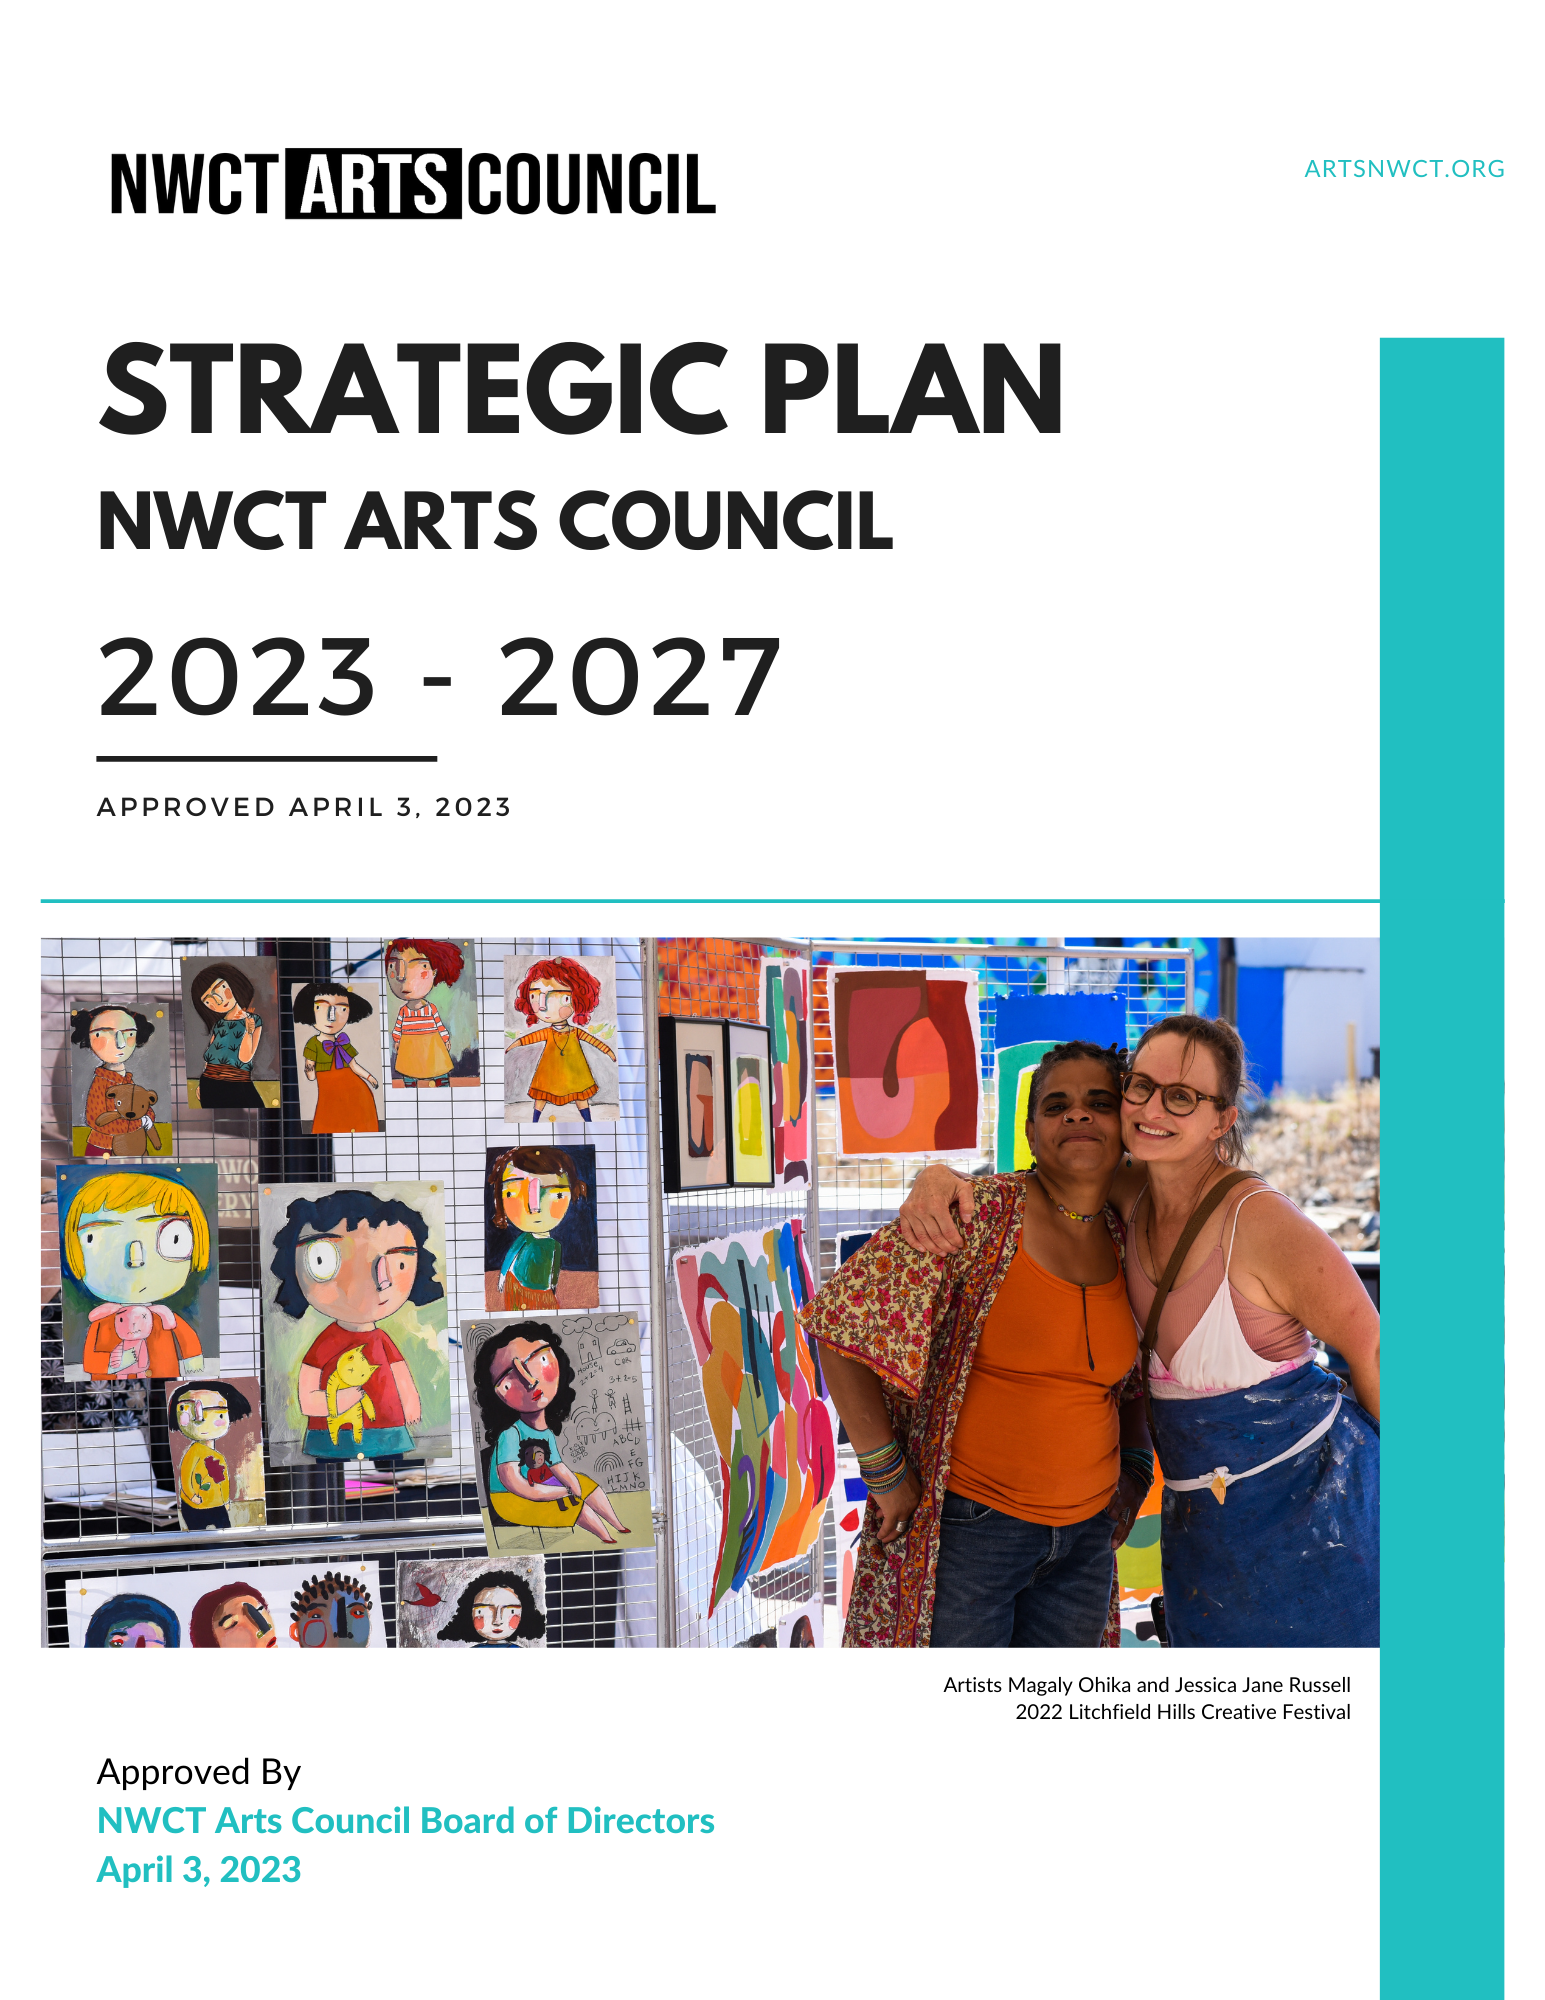 NWCT Arts Council 2023-2027 Strategic Plan